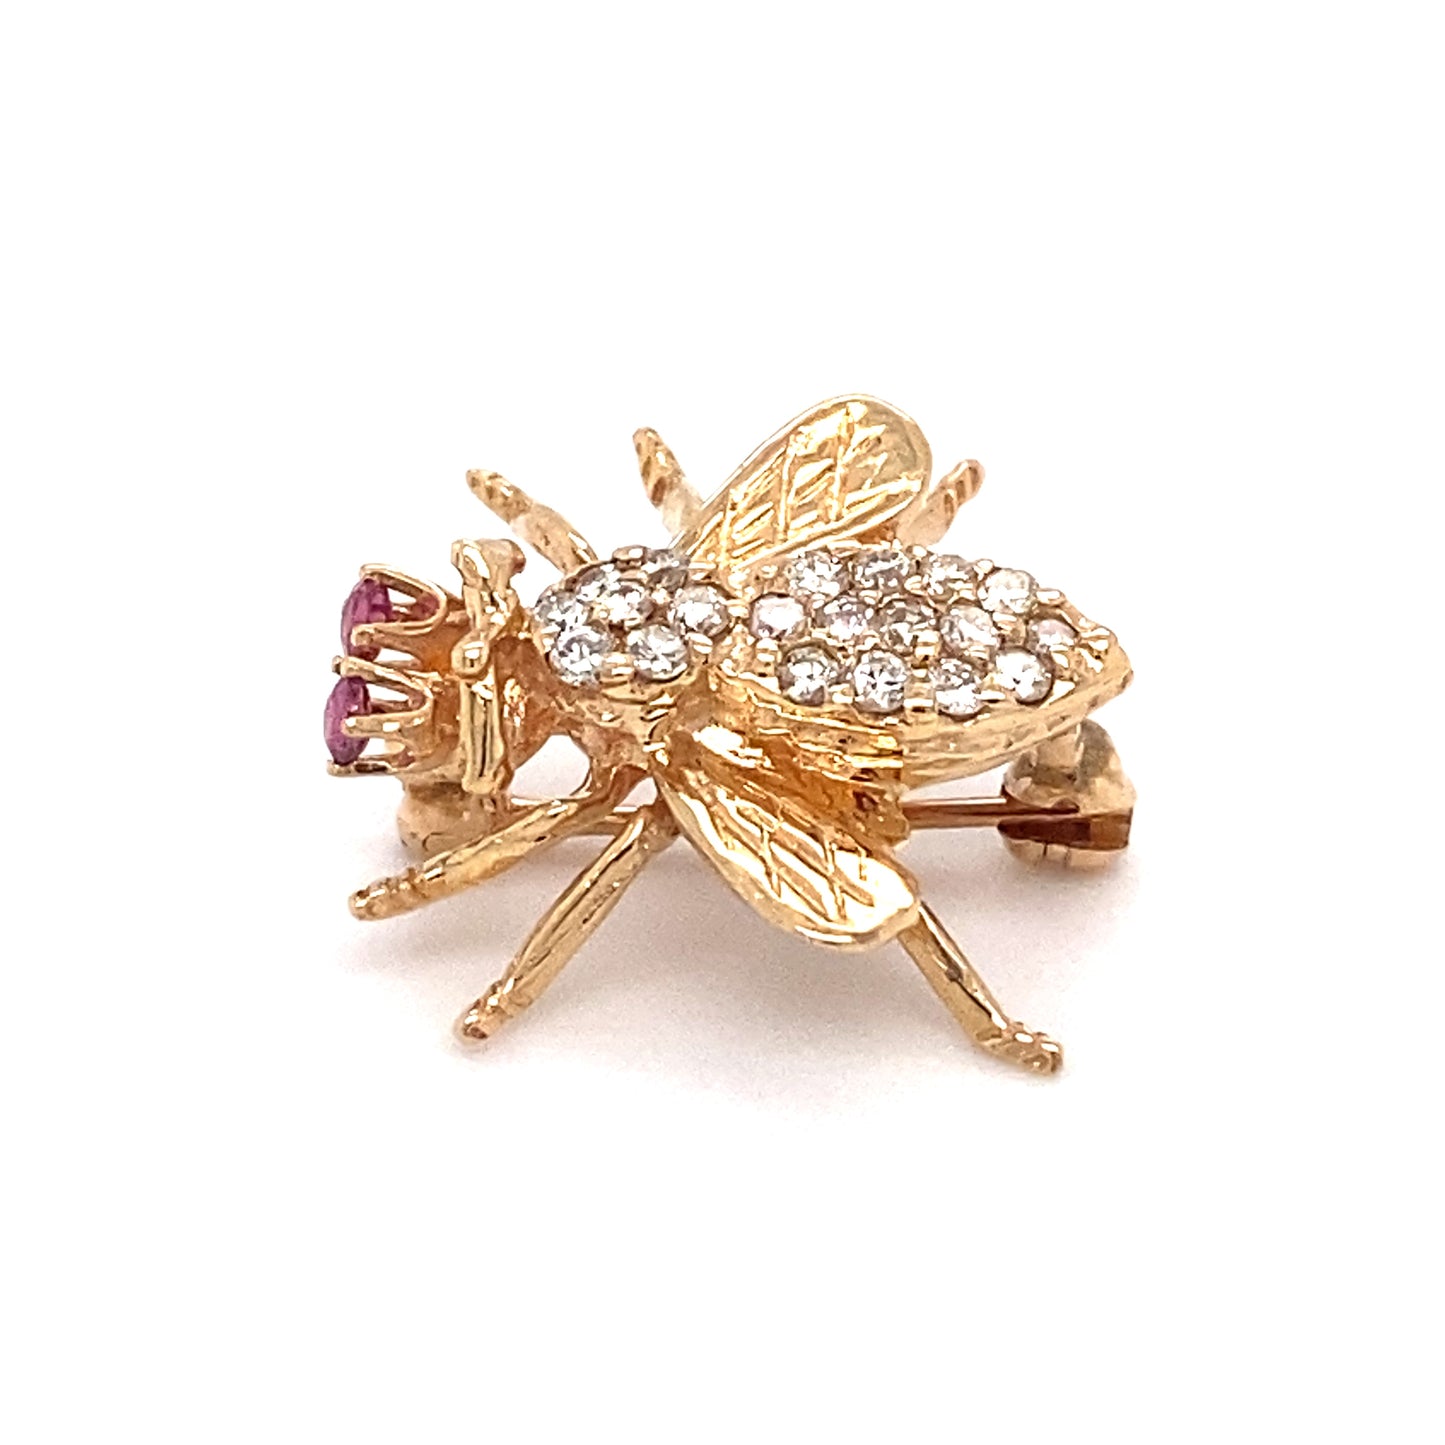 Circa 1980 Diamond Bee Pin With Ruby Eyes in 14 Karat Gold